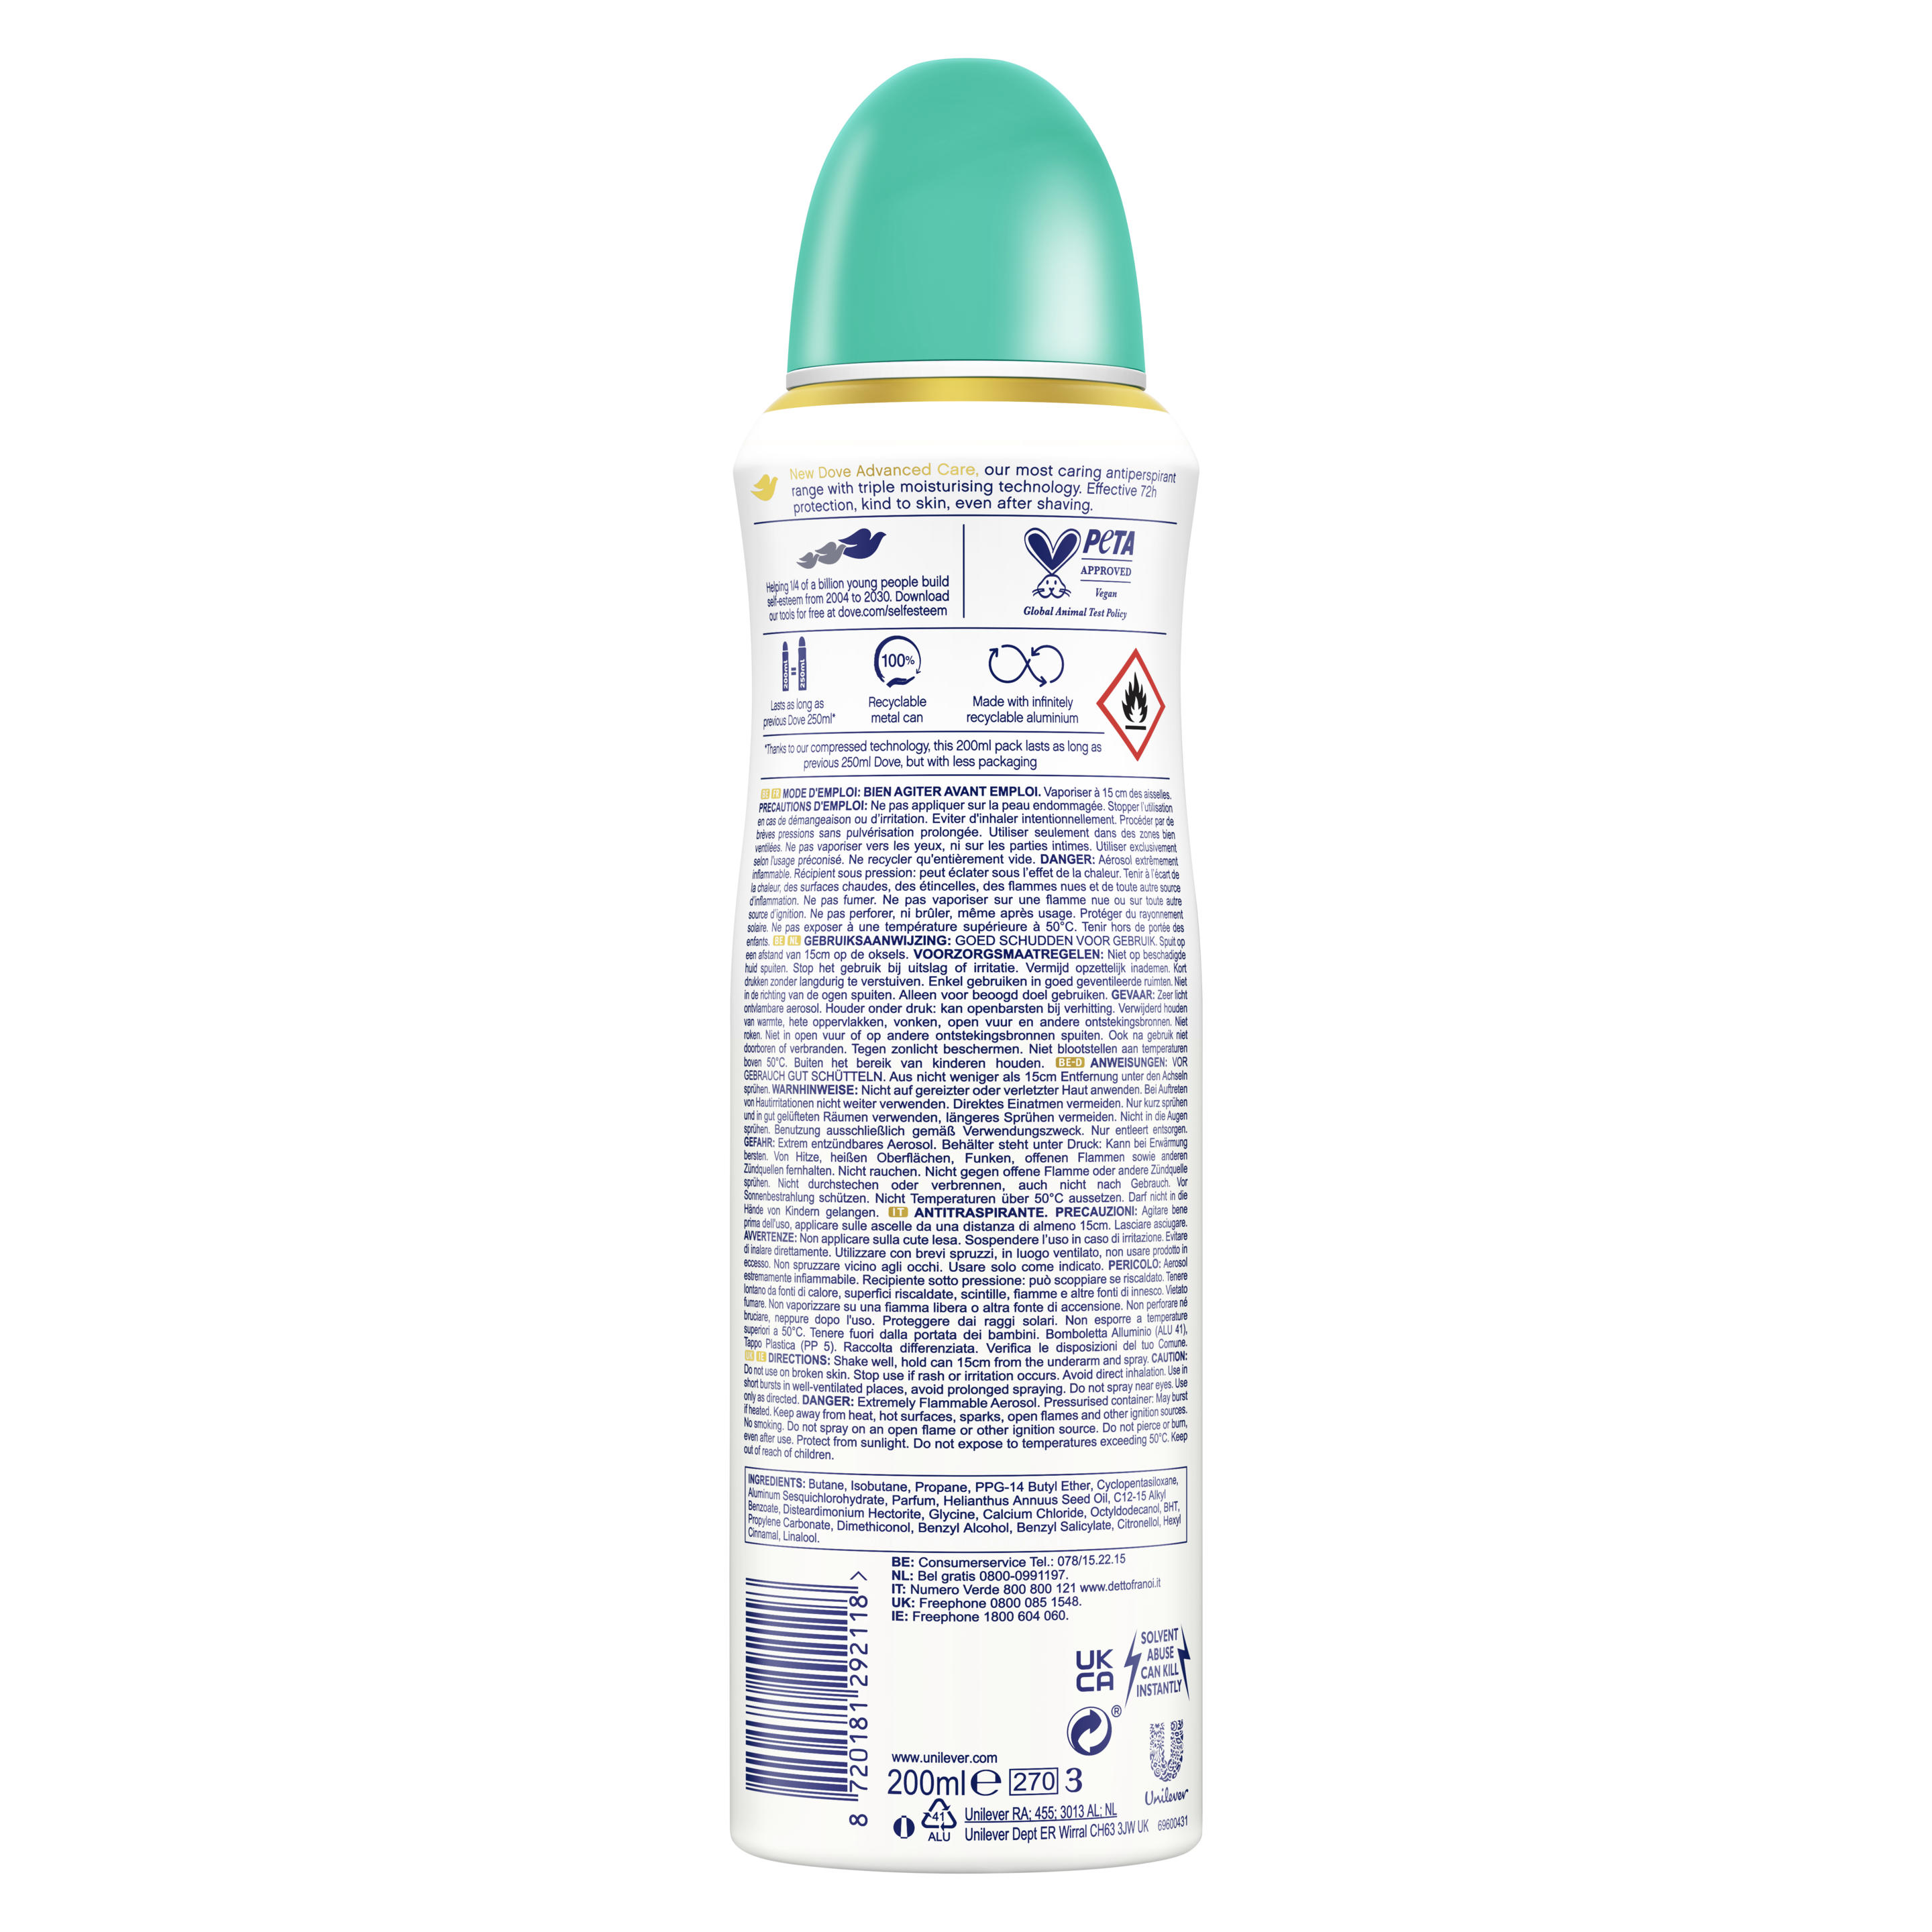 Advanced Care Go Fresh Pear & Aloe Vera Antiperspirant Deodorant Spray